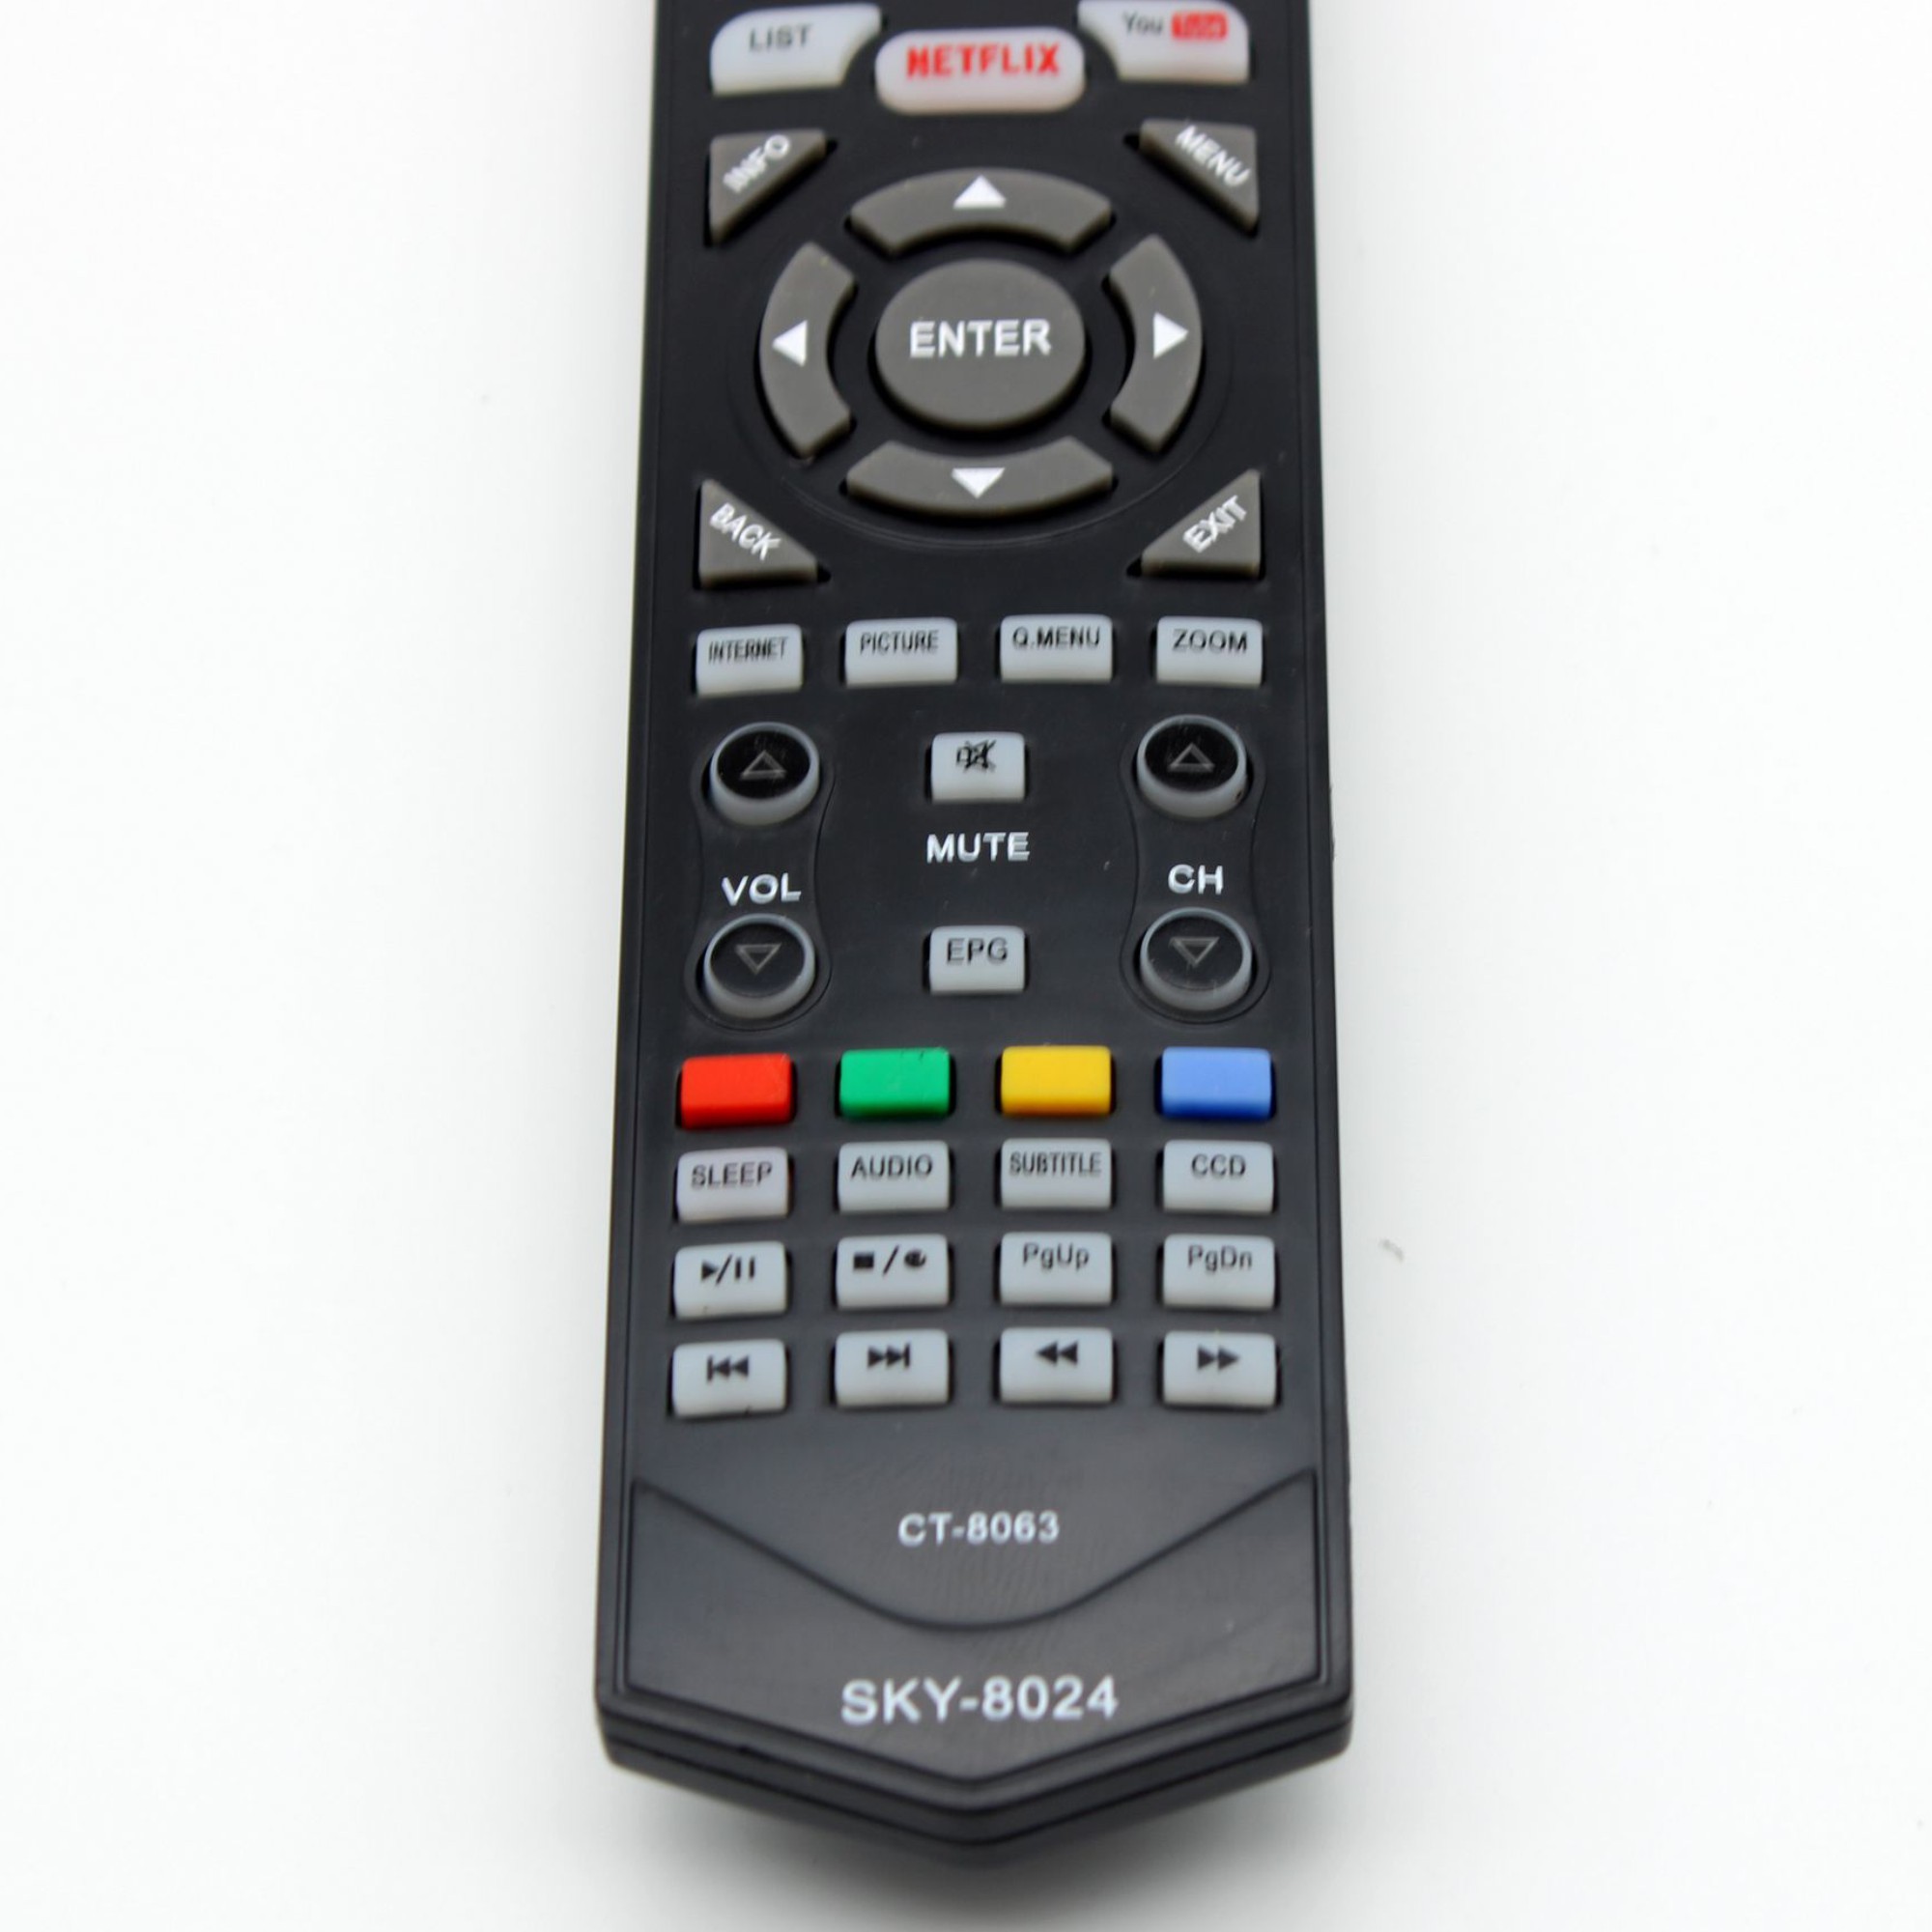 Controle Remoto Tv Semp Toshiba Sky-8024